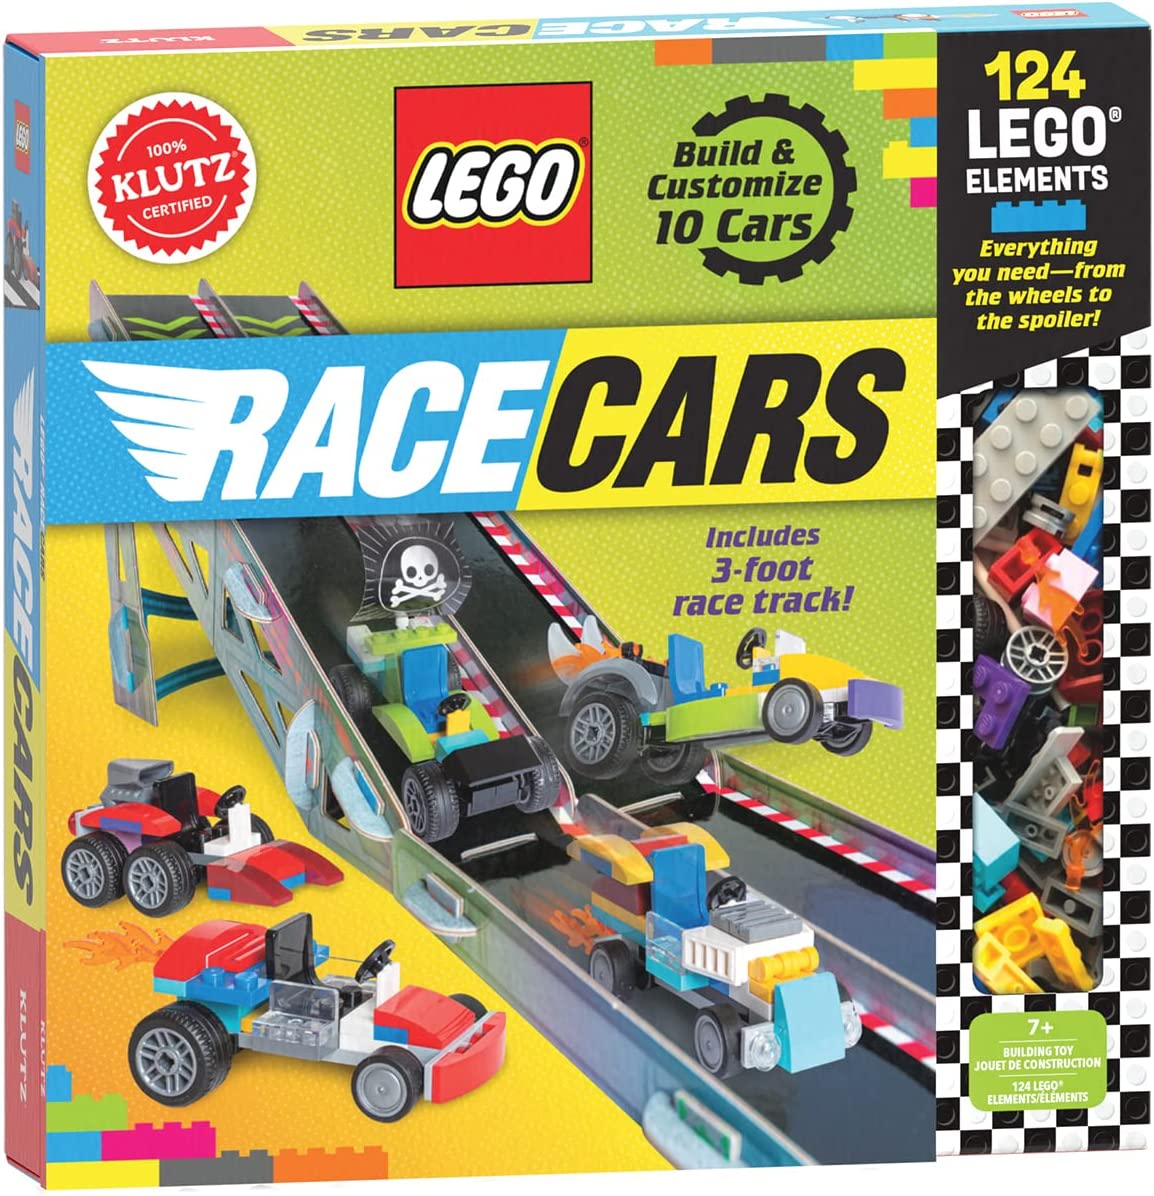 LEGO Race Cars by Klutz